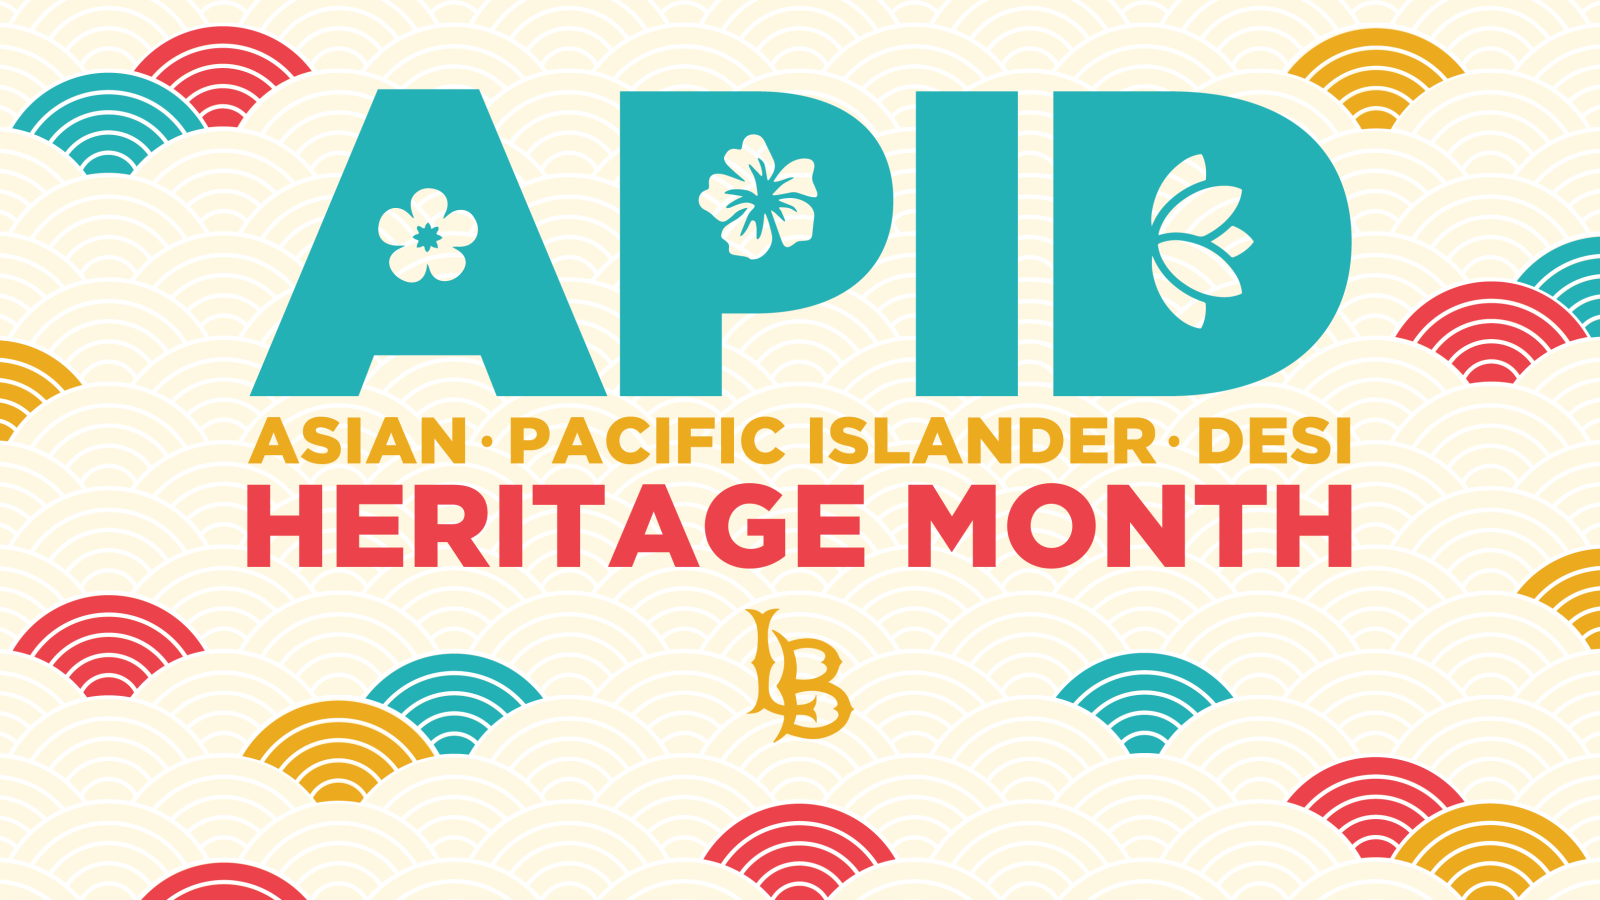 APID Heritage Month